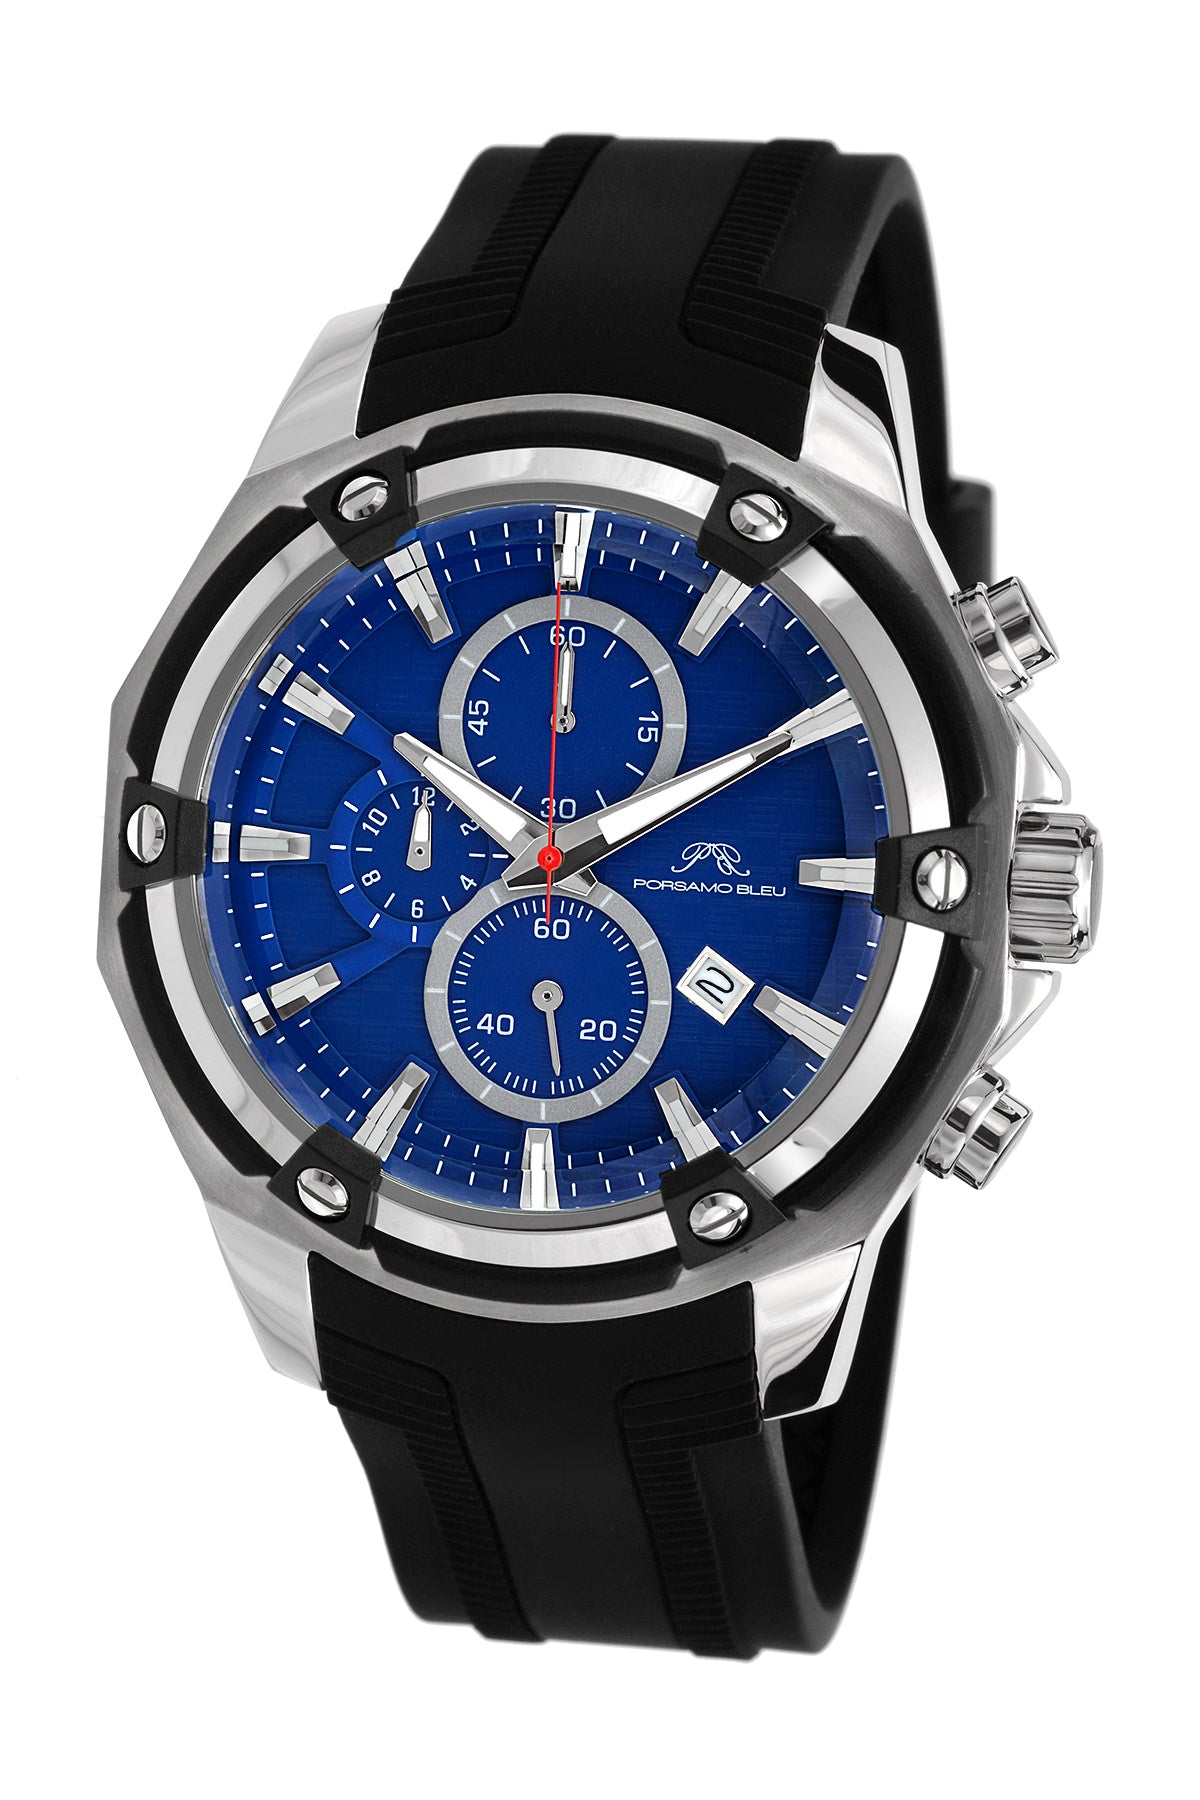 Porsamo Bleu Stavros luxury chronograph men's watch, silicone strap, silver, black, blue 483ASTR